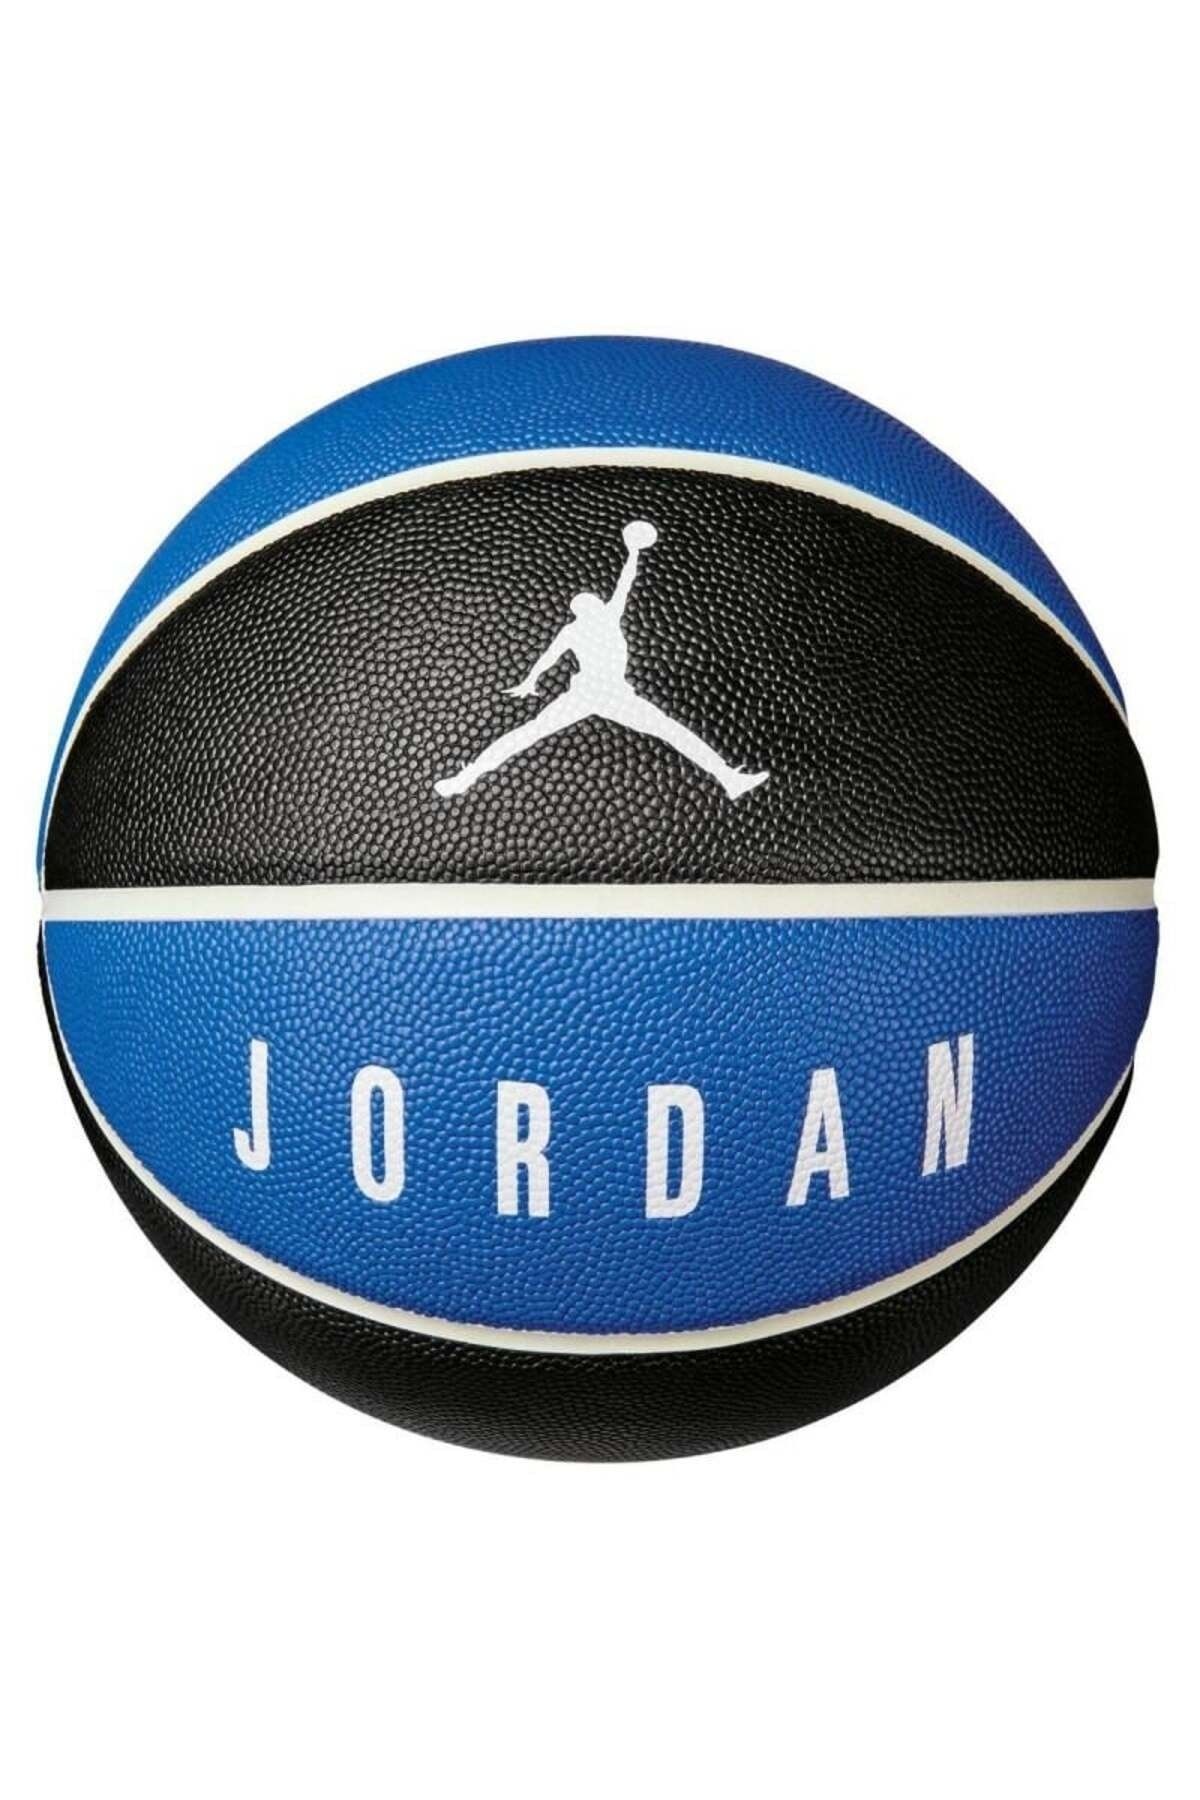 Nike Jordan Ultimate 8P Basketbol Topu 7 Numara Mavi